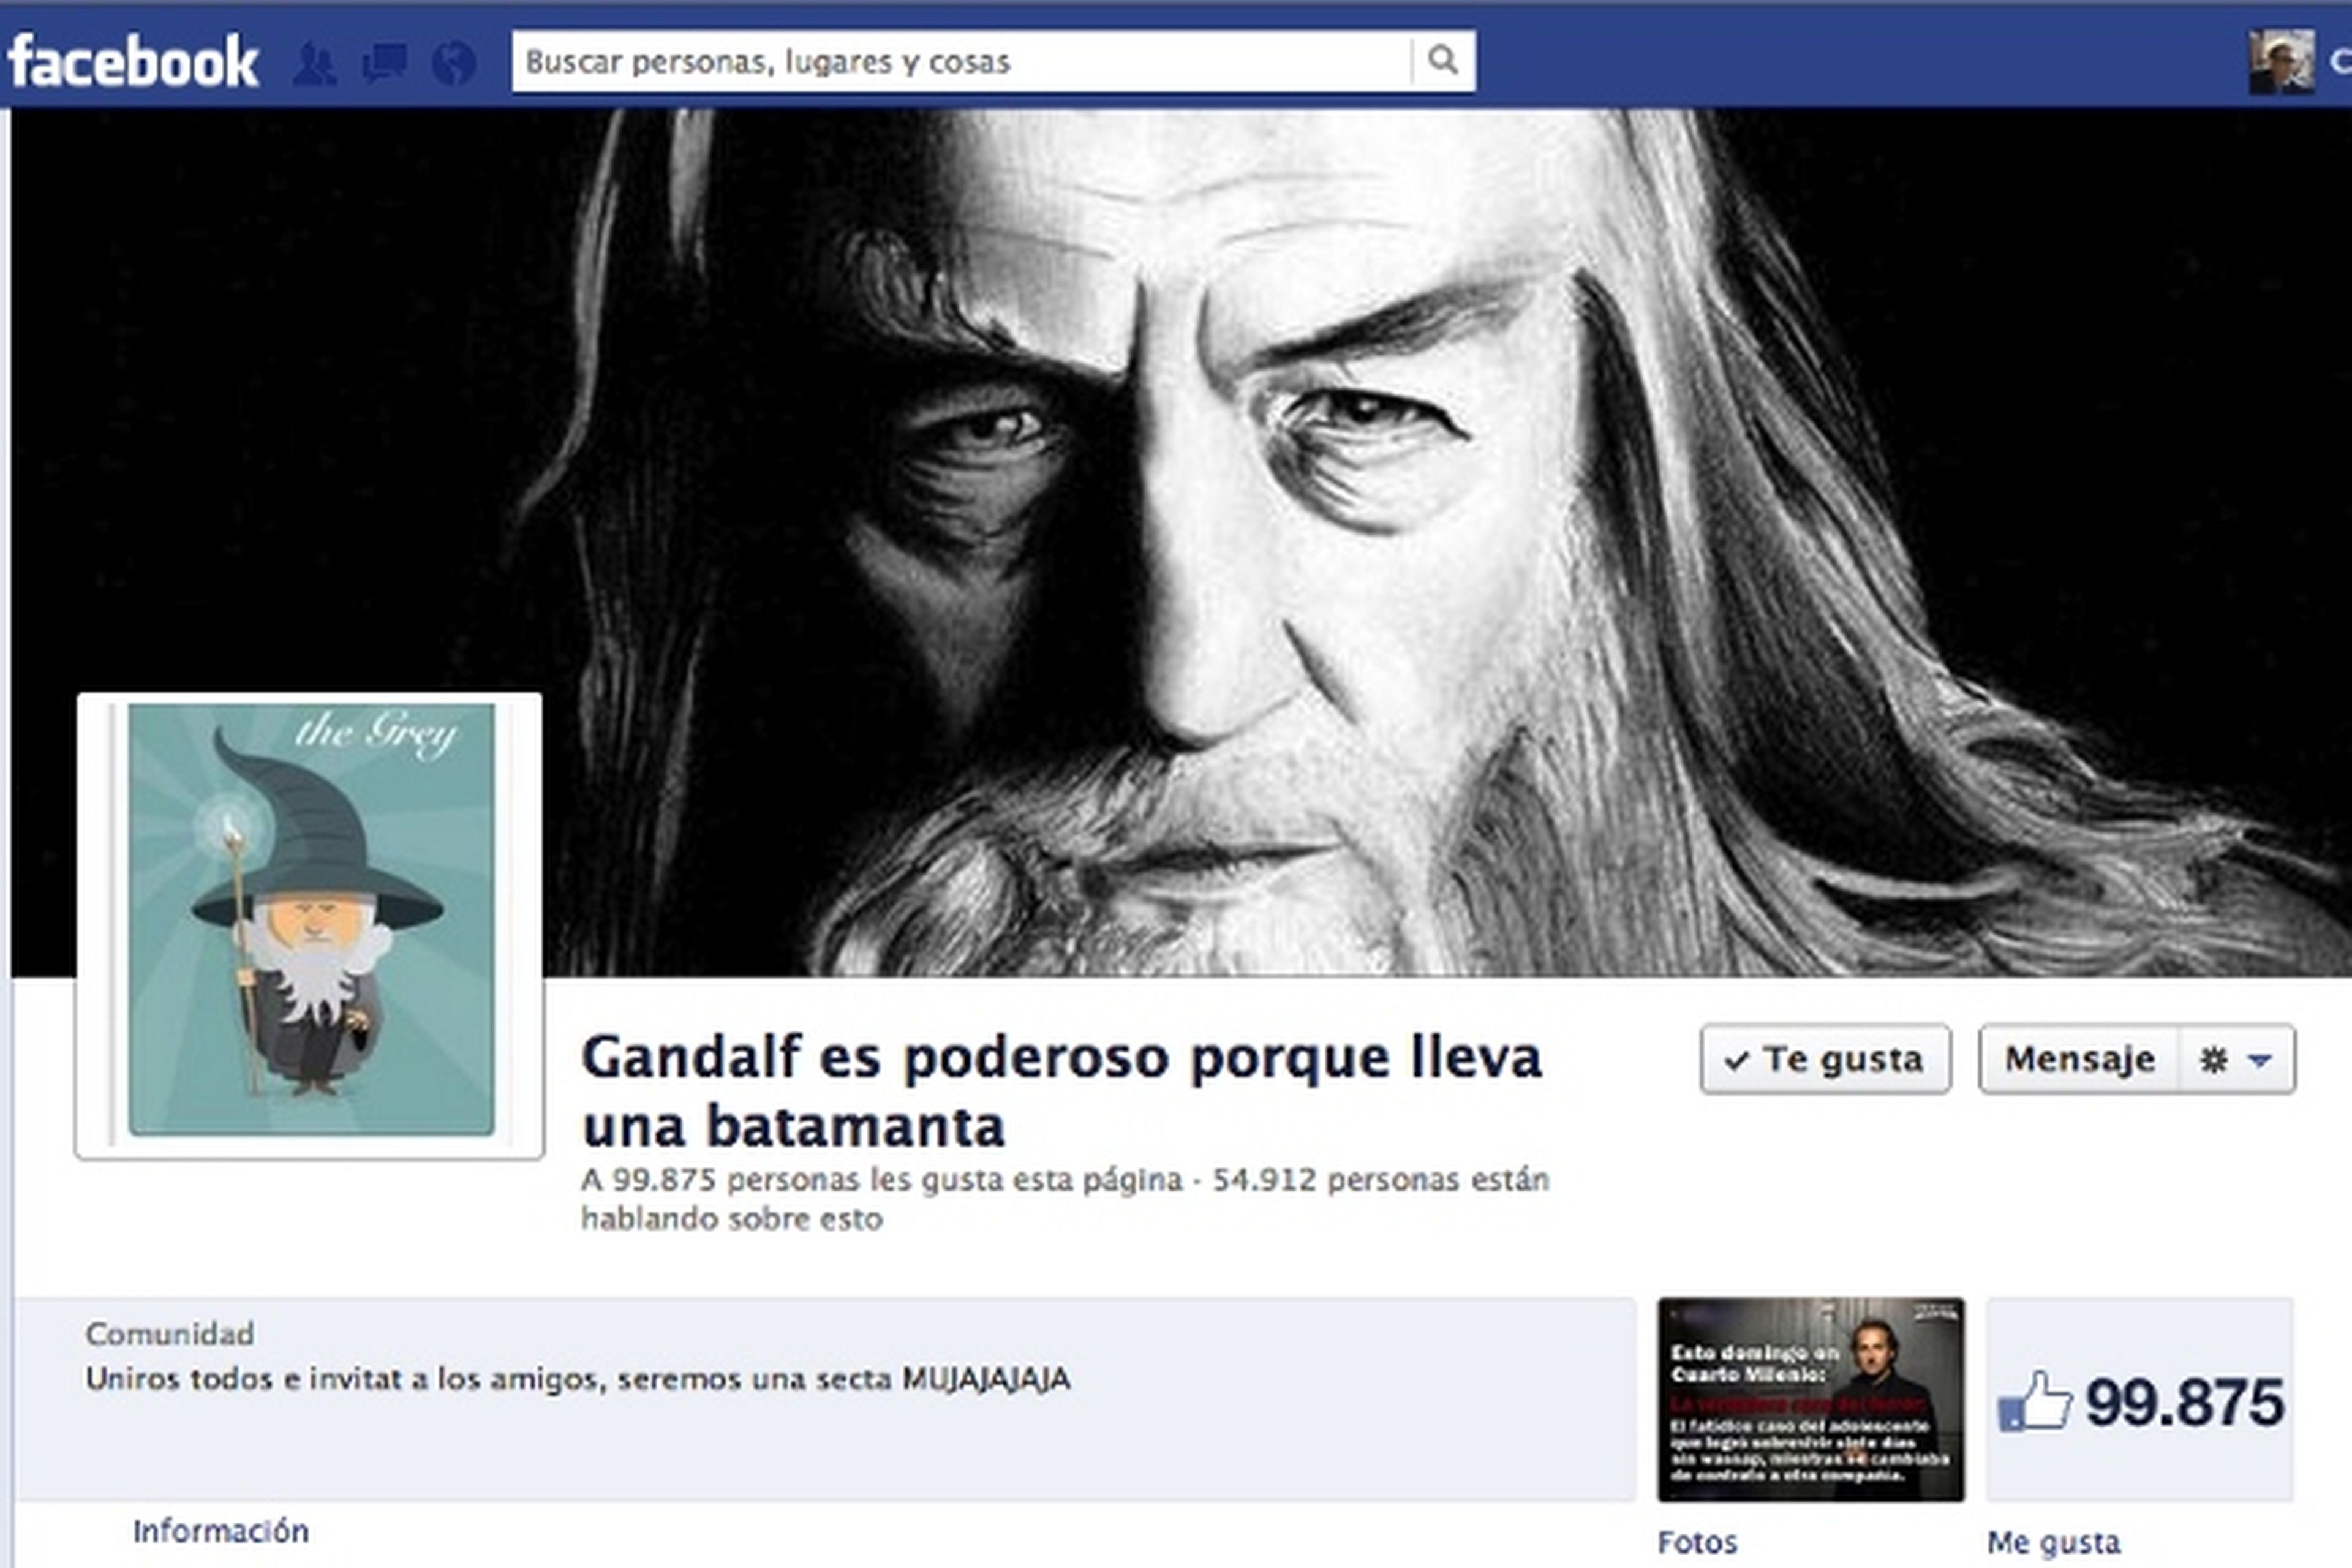 Grupo Gandalf es poderoso porque lleva batamanta en Facebook